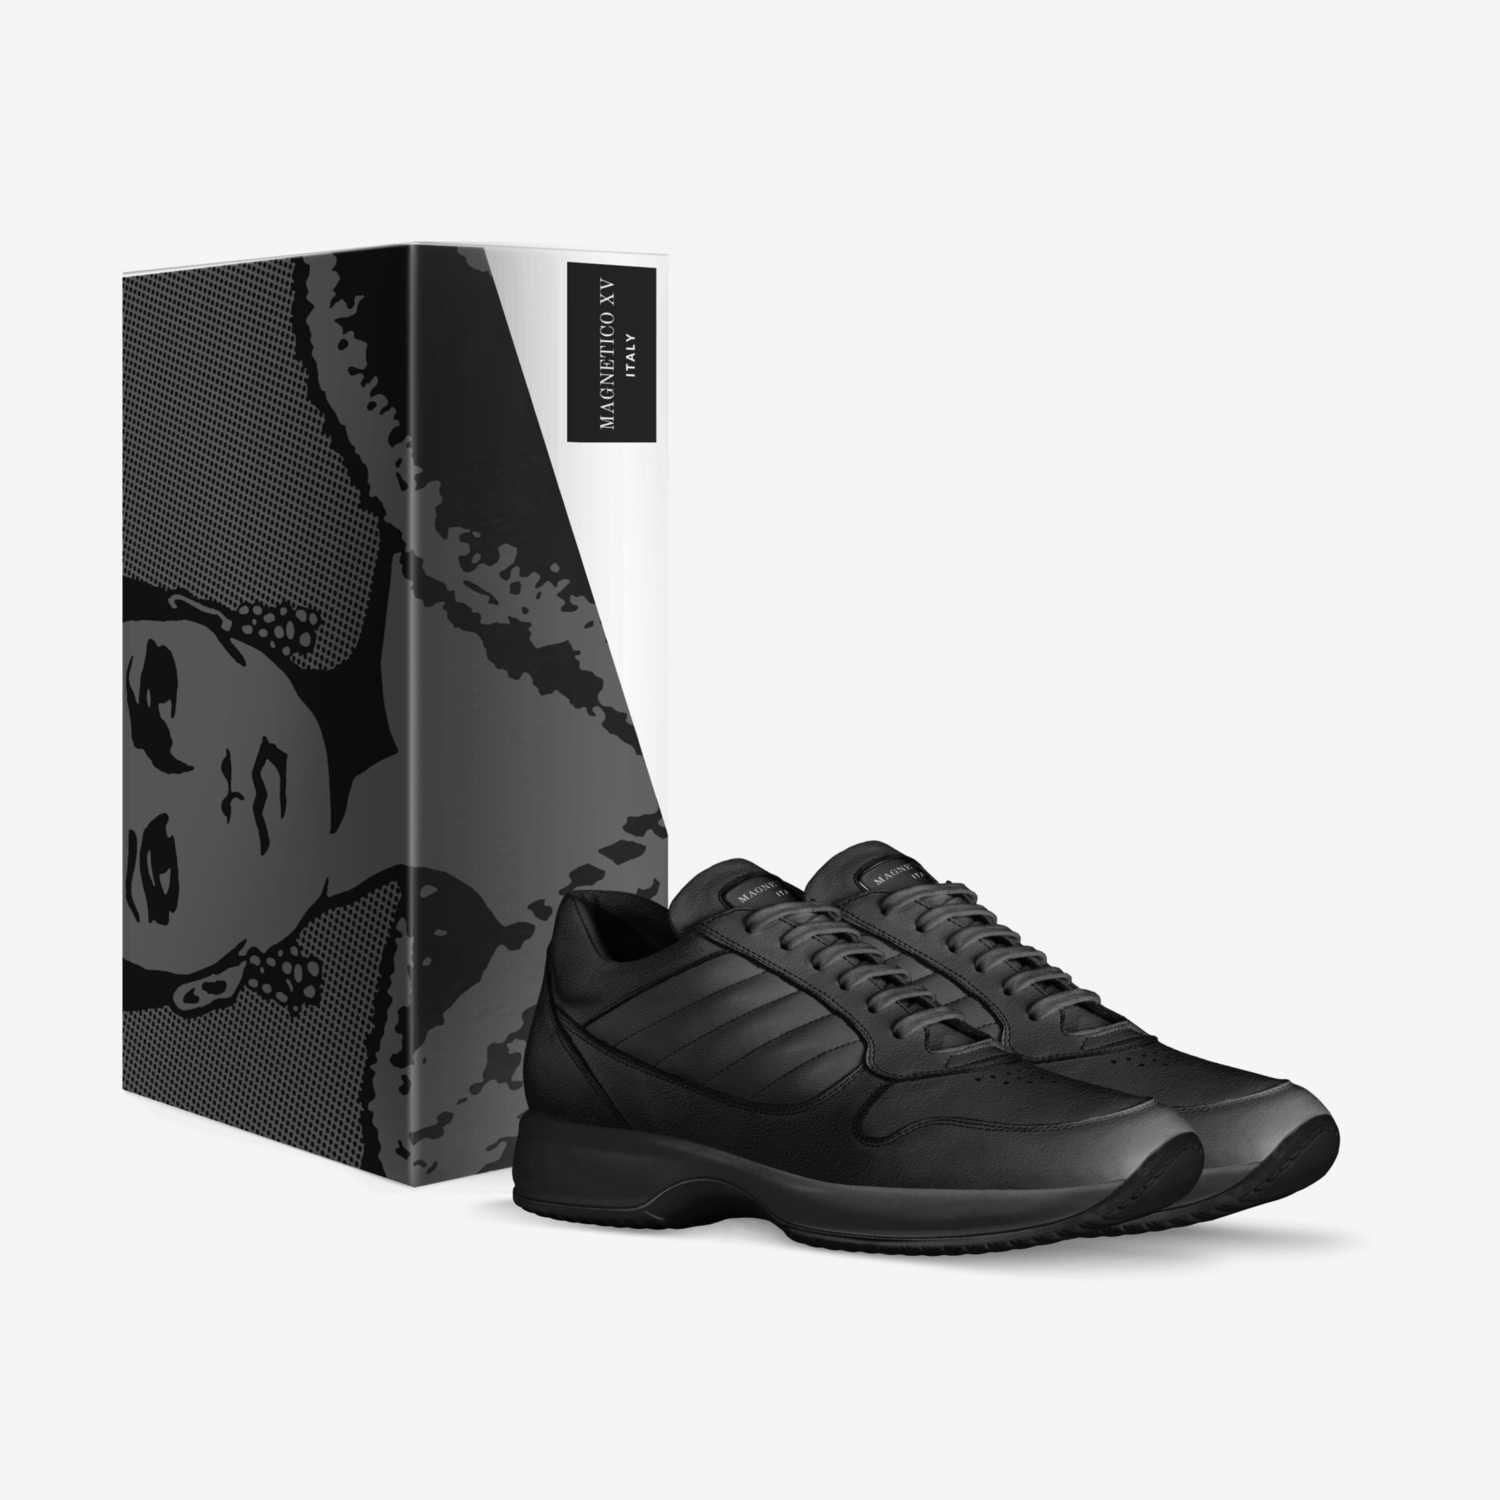 MAGNETICO XV EBONY custom made in Italy shoes by Jesús Sandoval | Box view